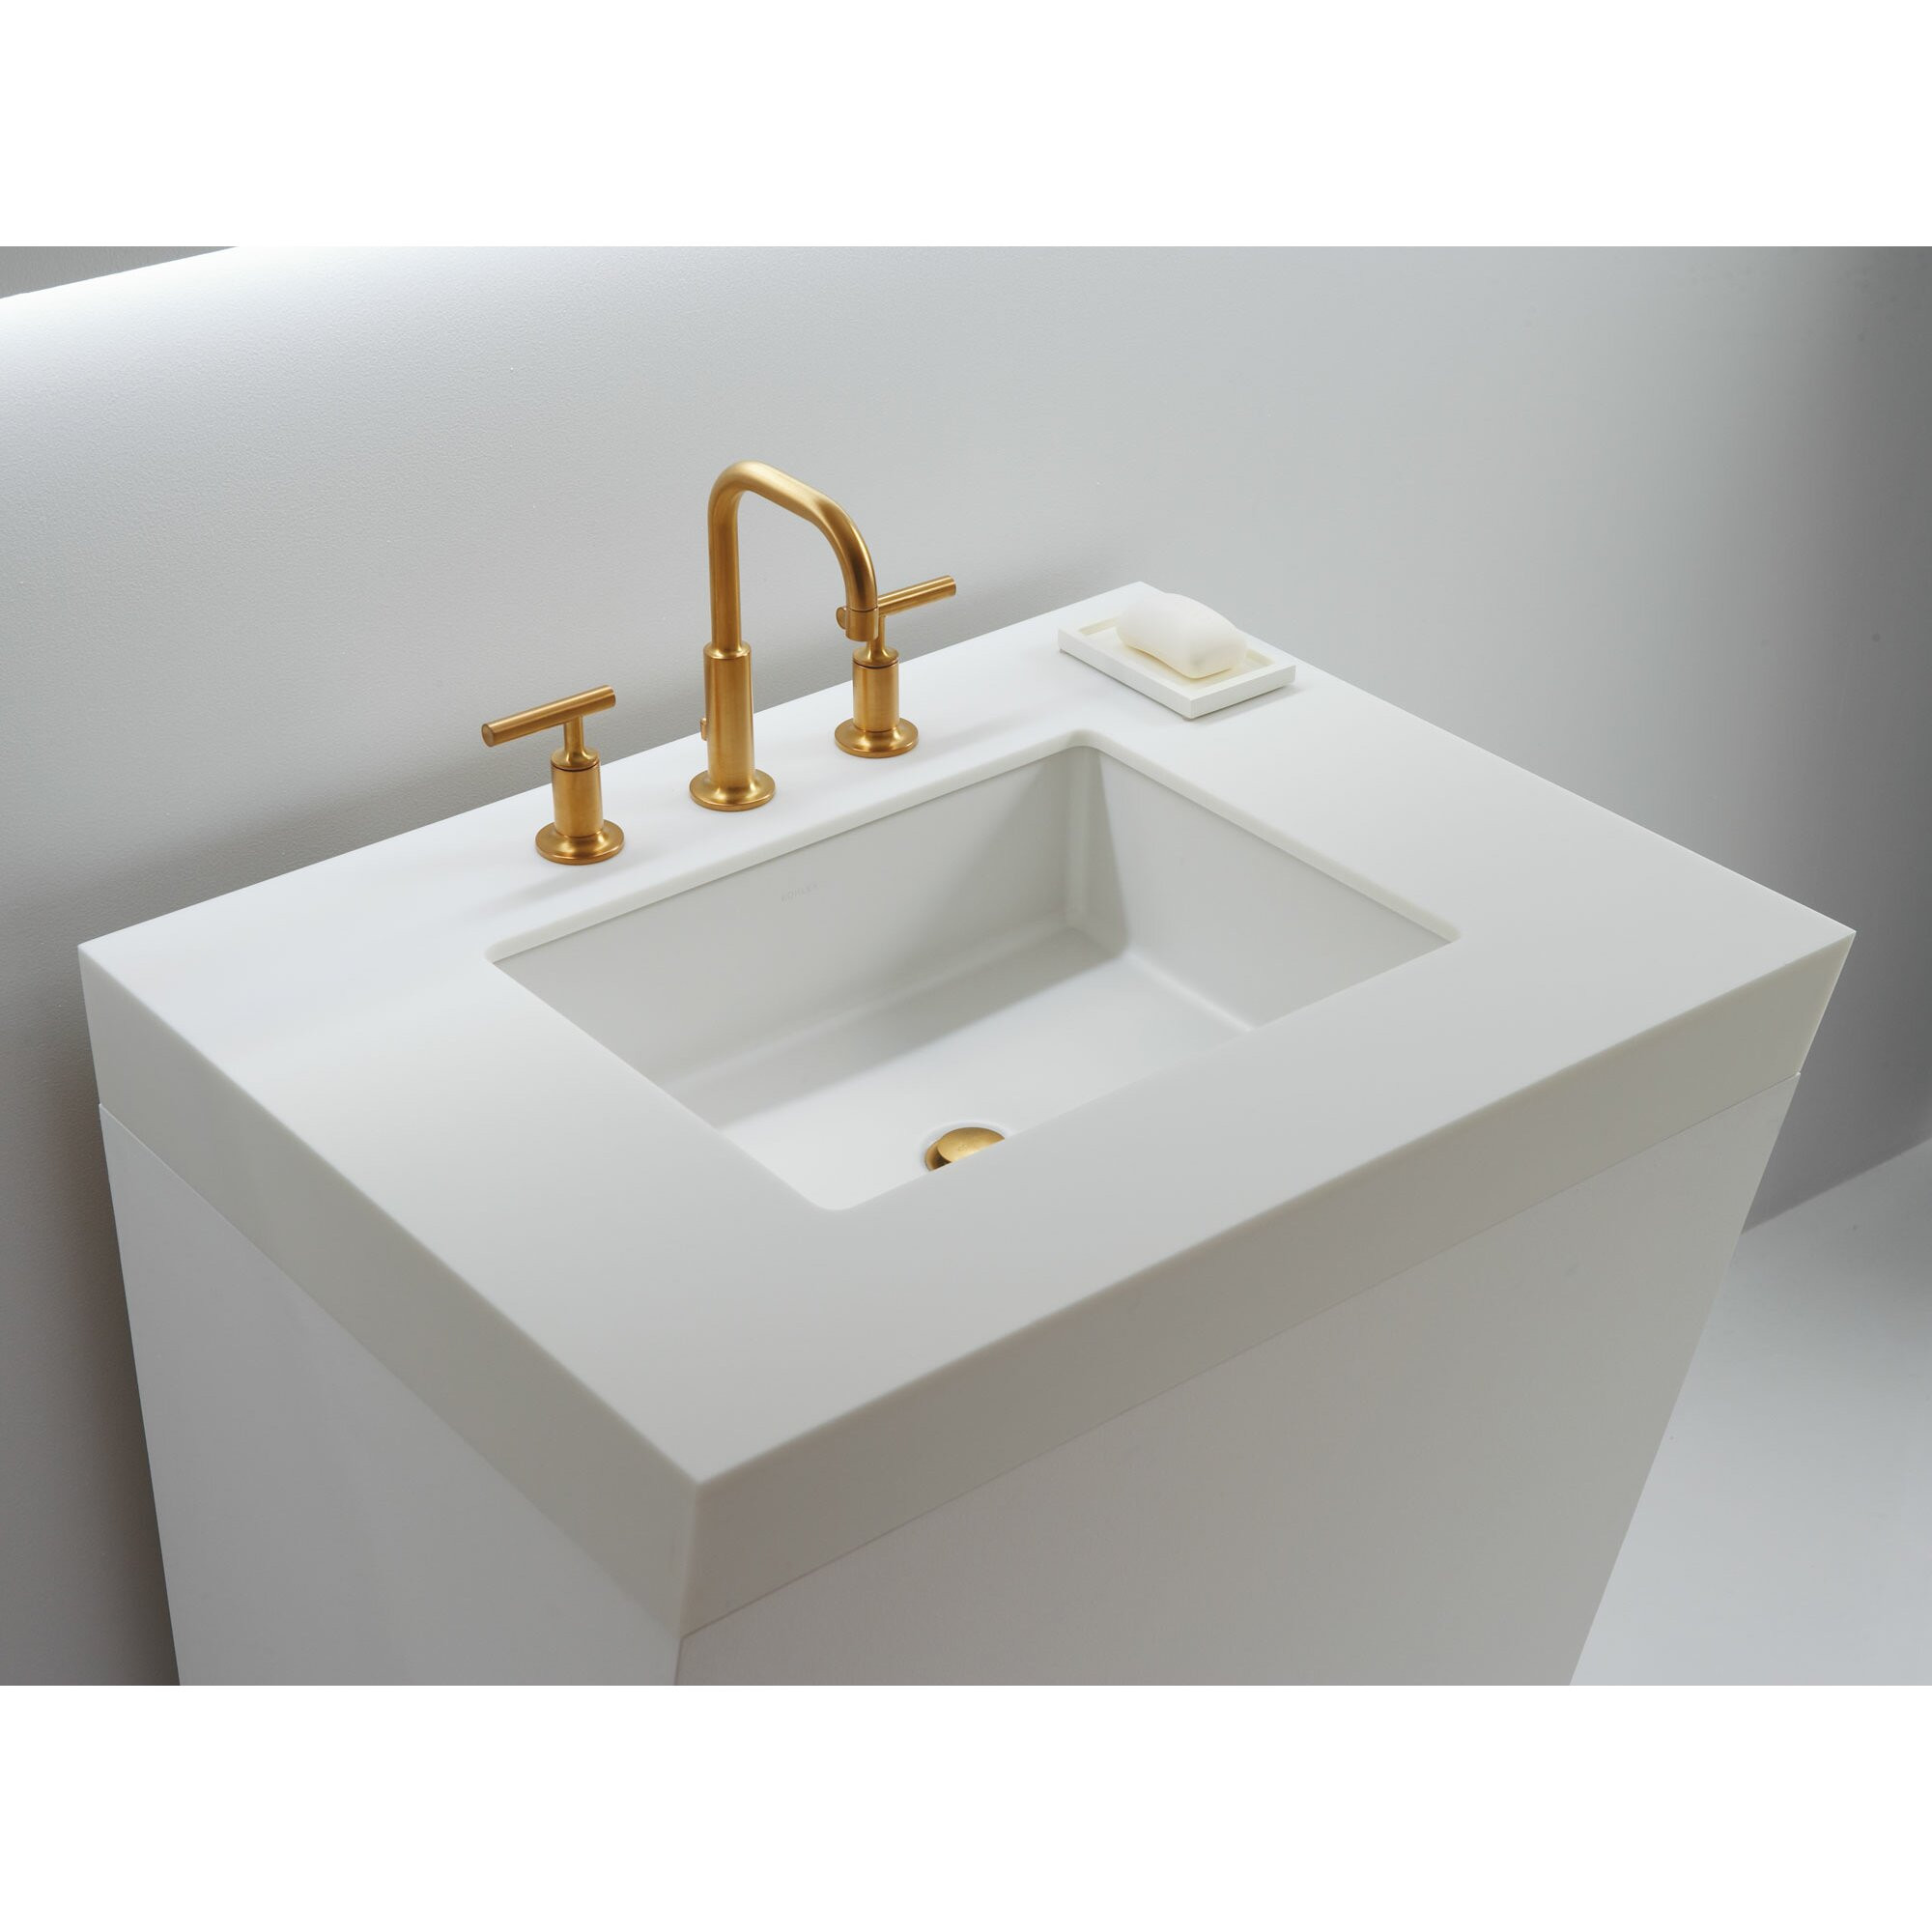 Bathroom Sink Undermount
 Kohler Verticyl Rectangular Undermount Bathroom Sink with